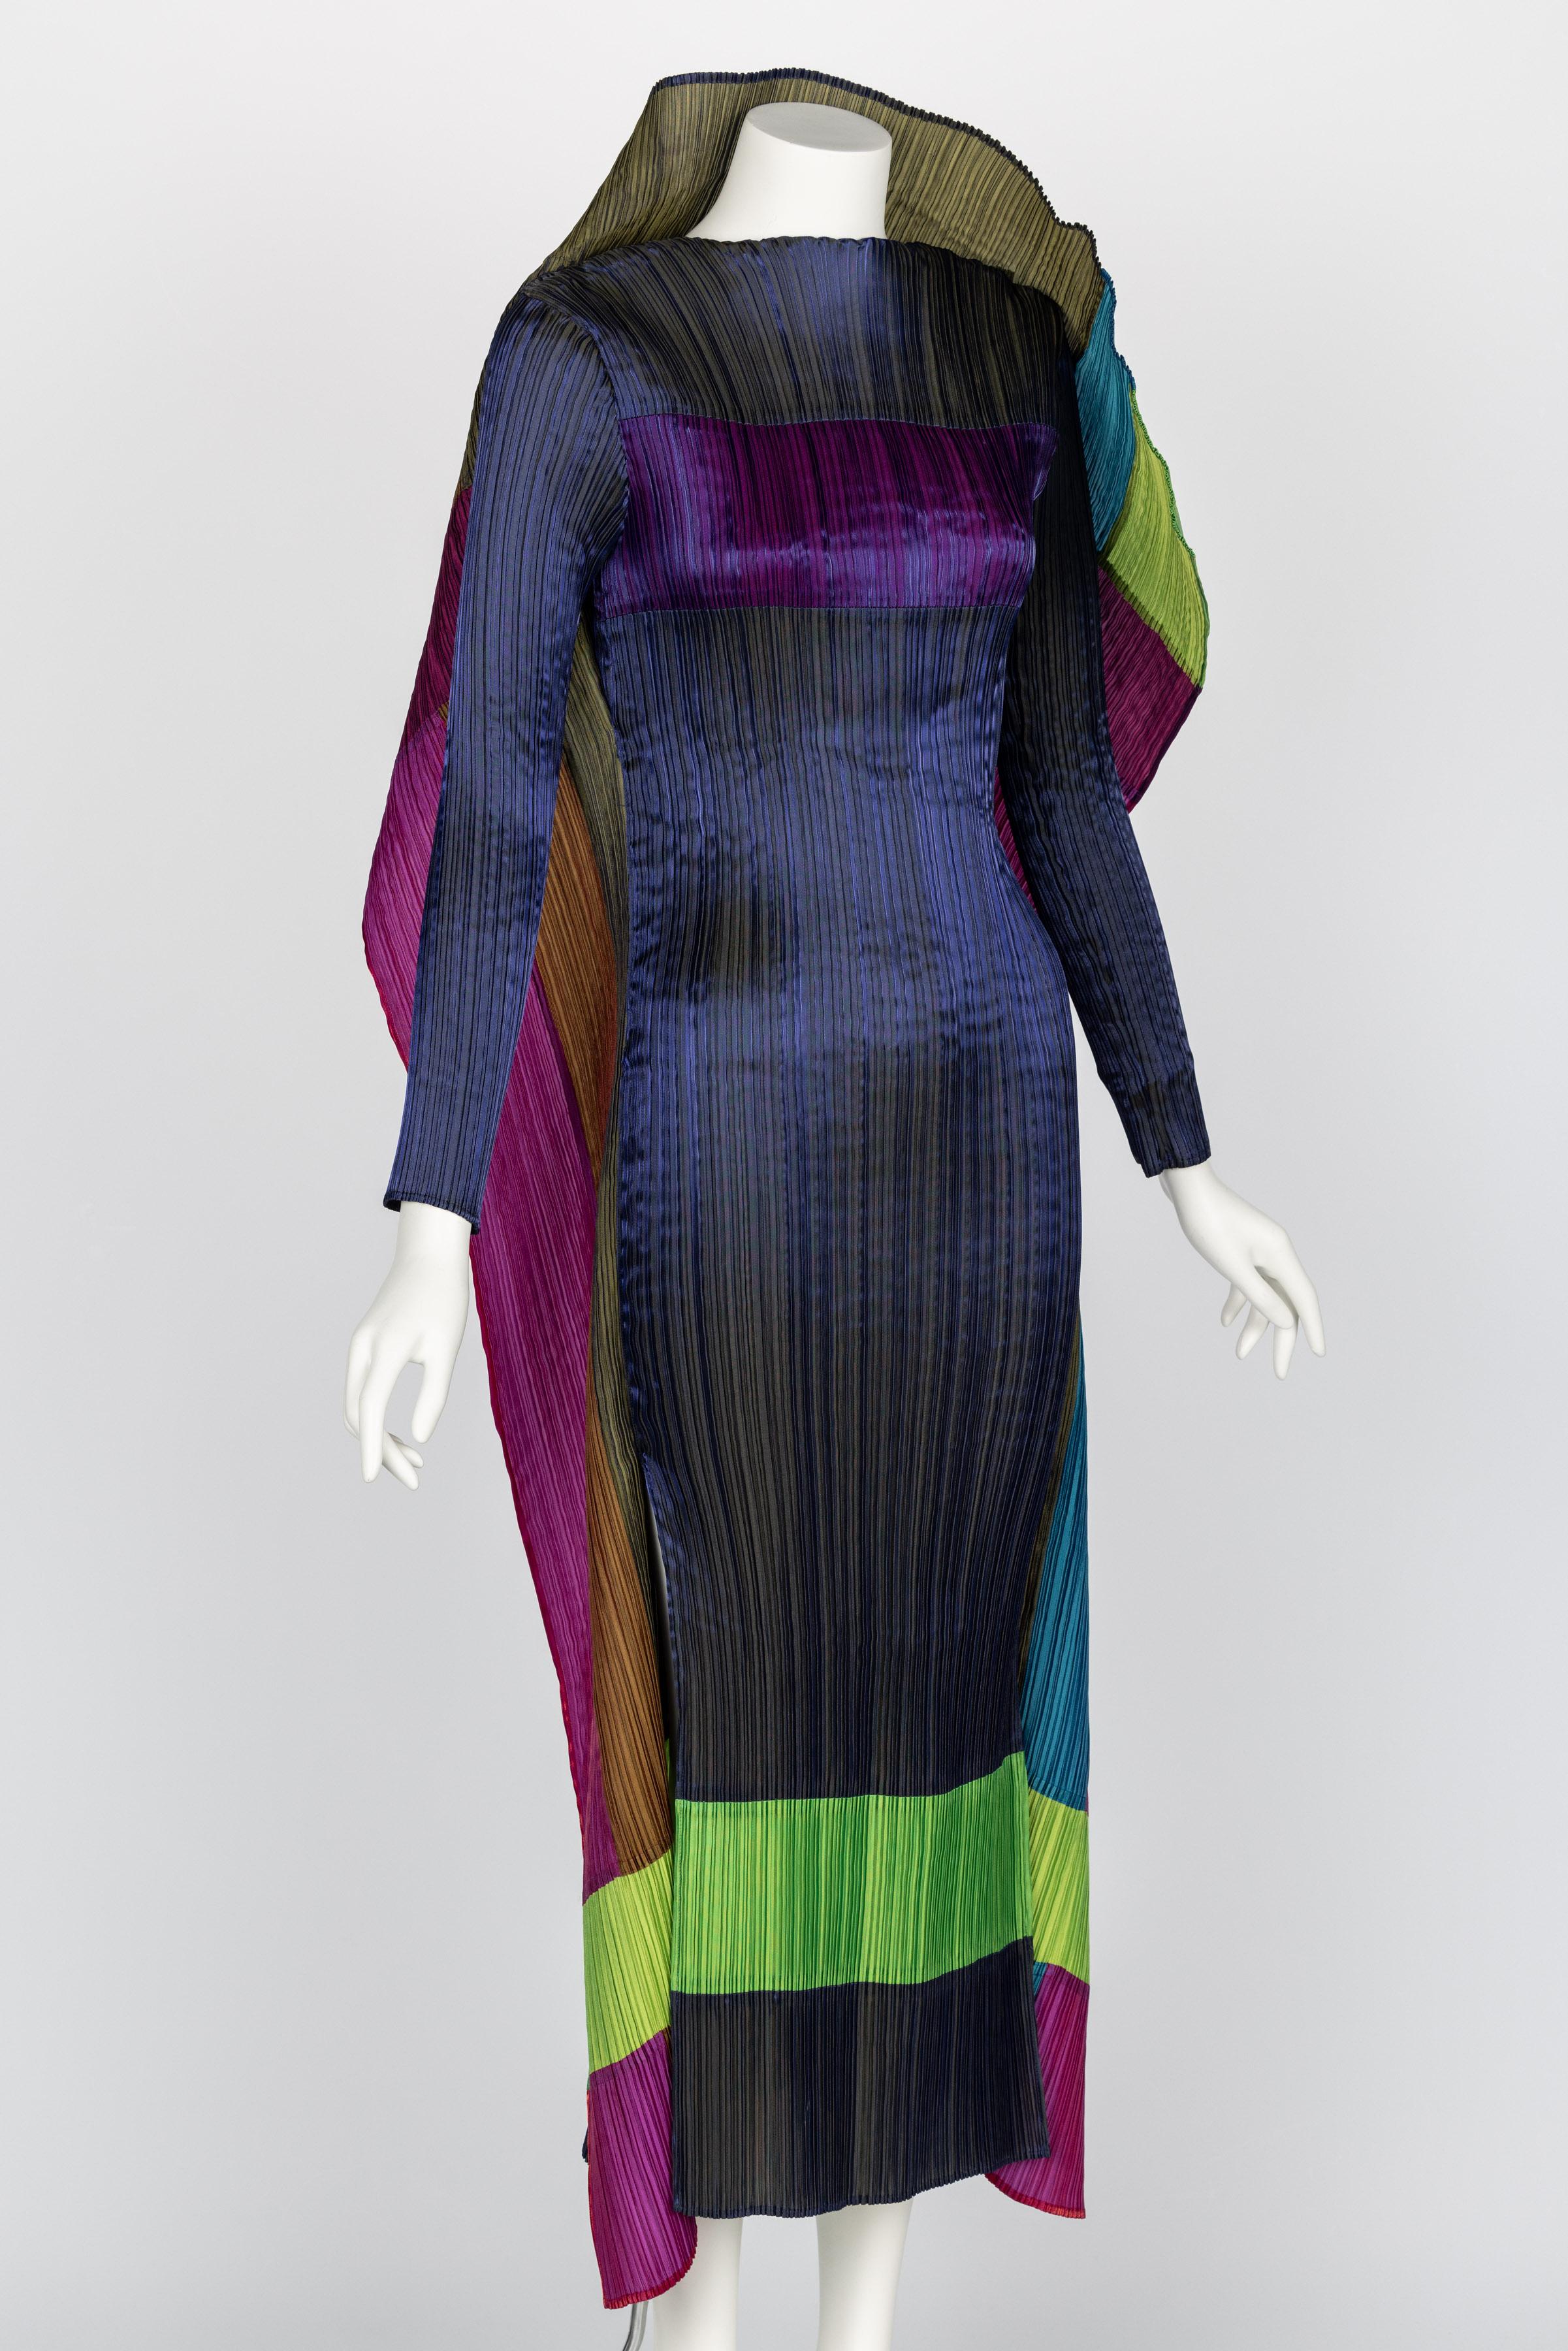 Women's Incredible Rare Issey Miyake Pleats Please Avant Garde Color Block Dress For Sale